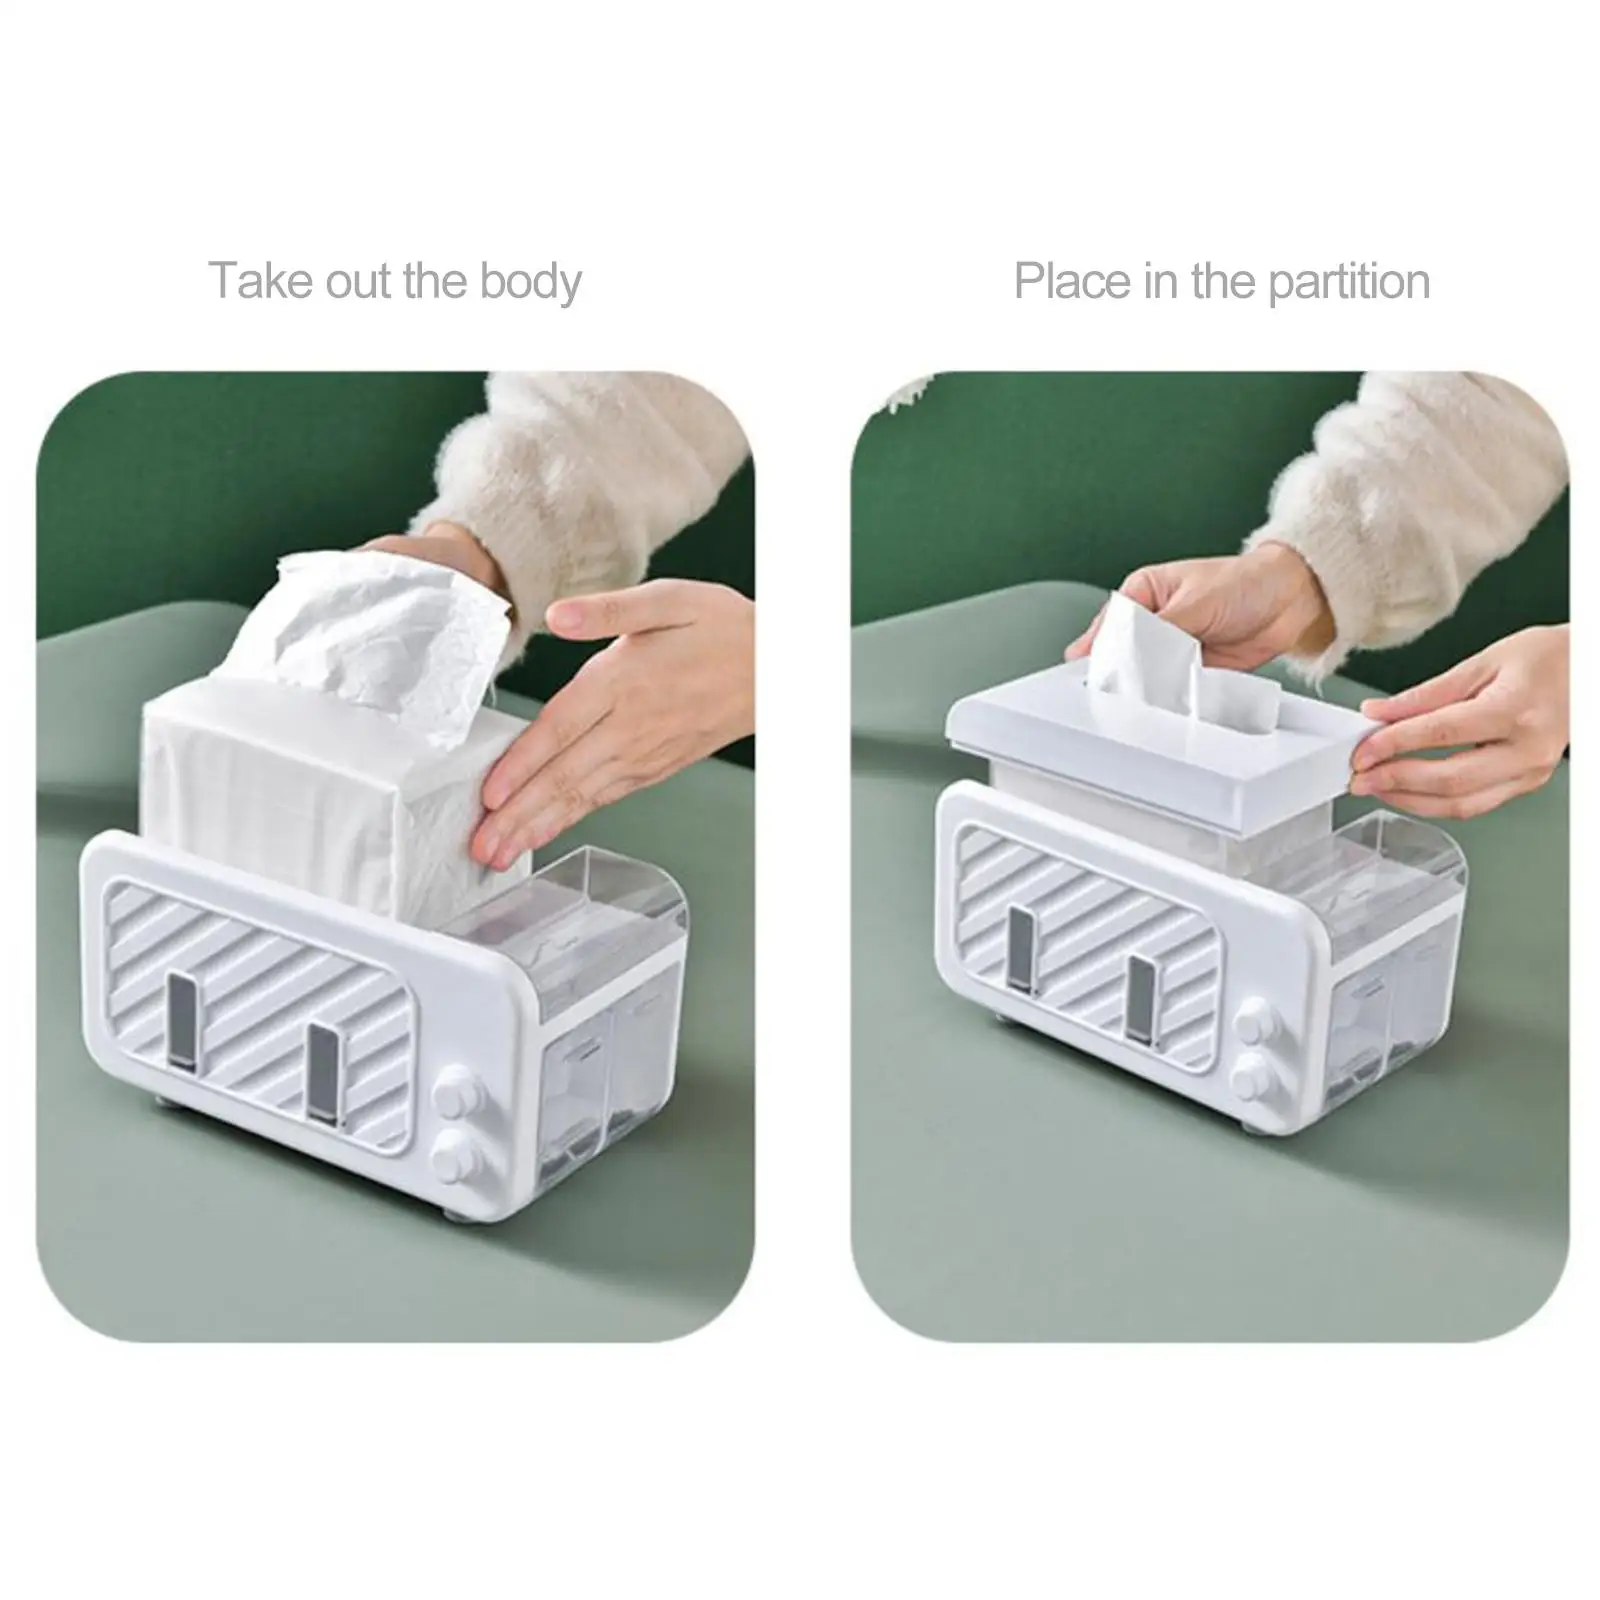 

Kitchen Tissue Box Storage Box Car Napkins Holder Tissue Case for Bedrooms